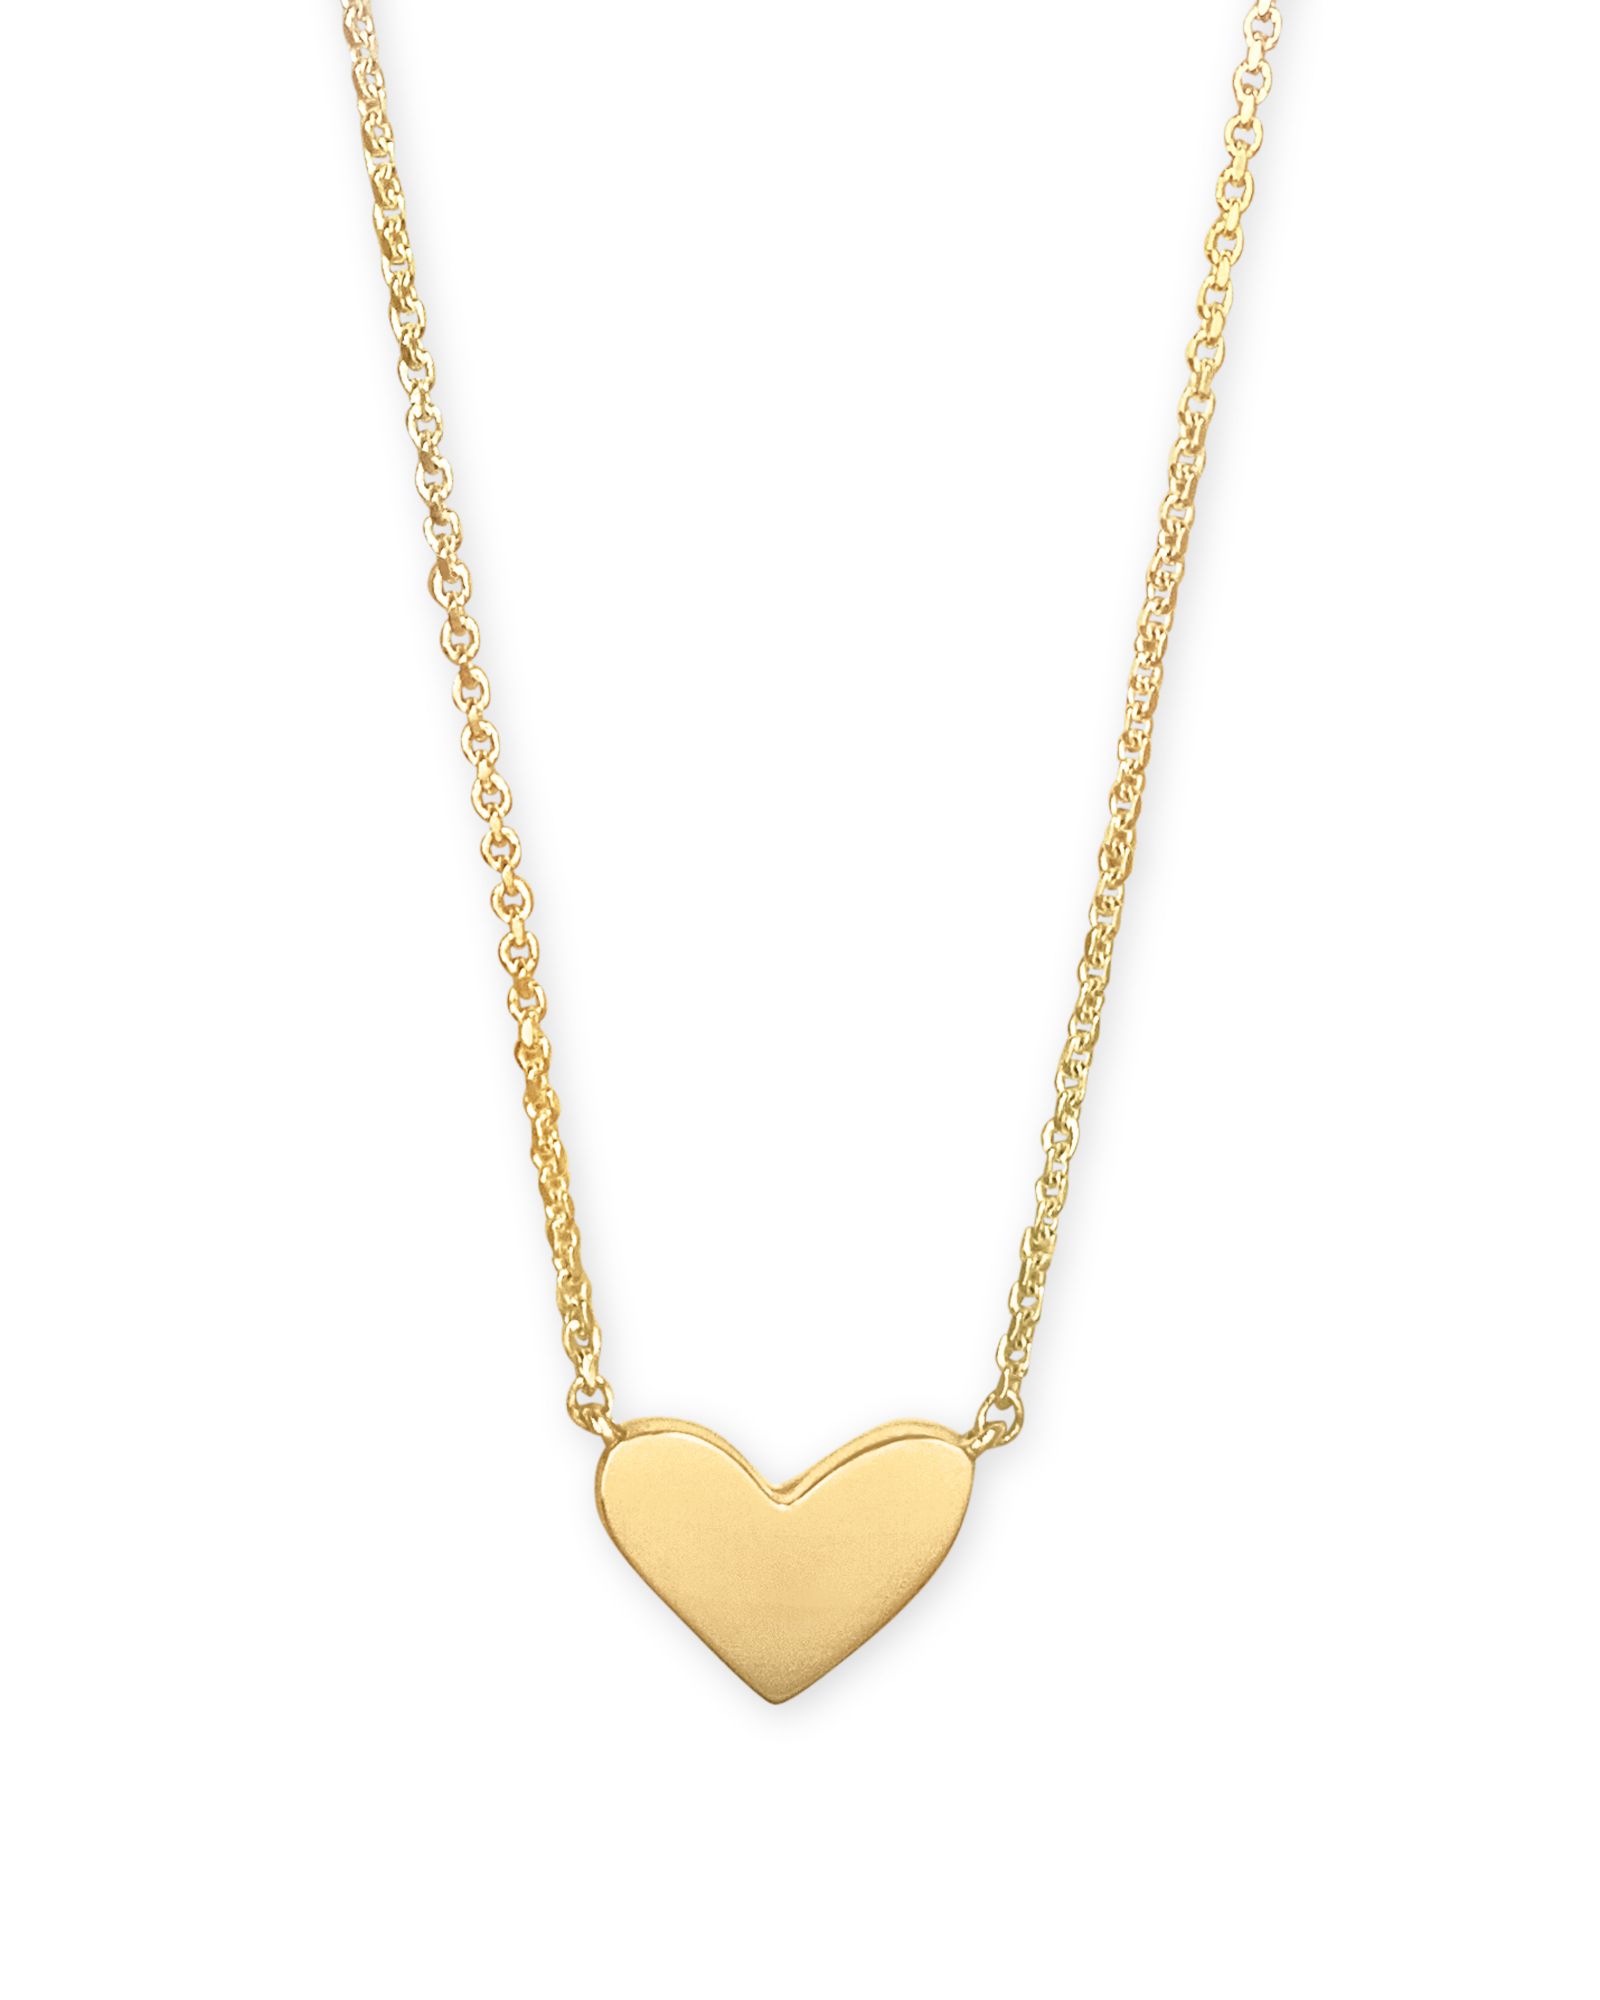 Ari Heart Pendant Necklace in 18k Gold Vermeil | Kendra Scott | Kendra Scott